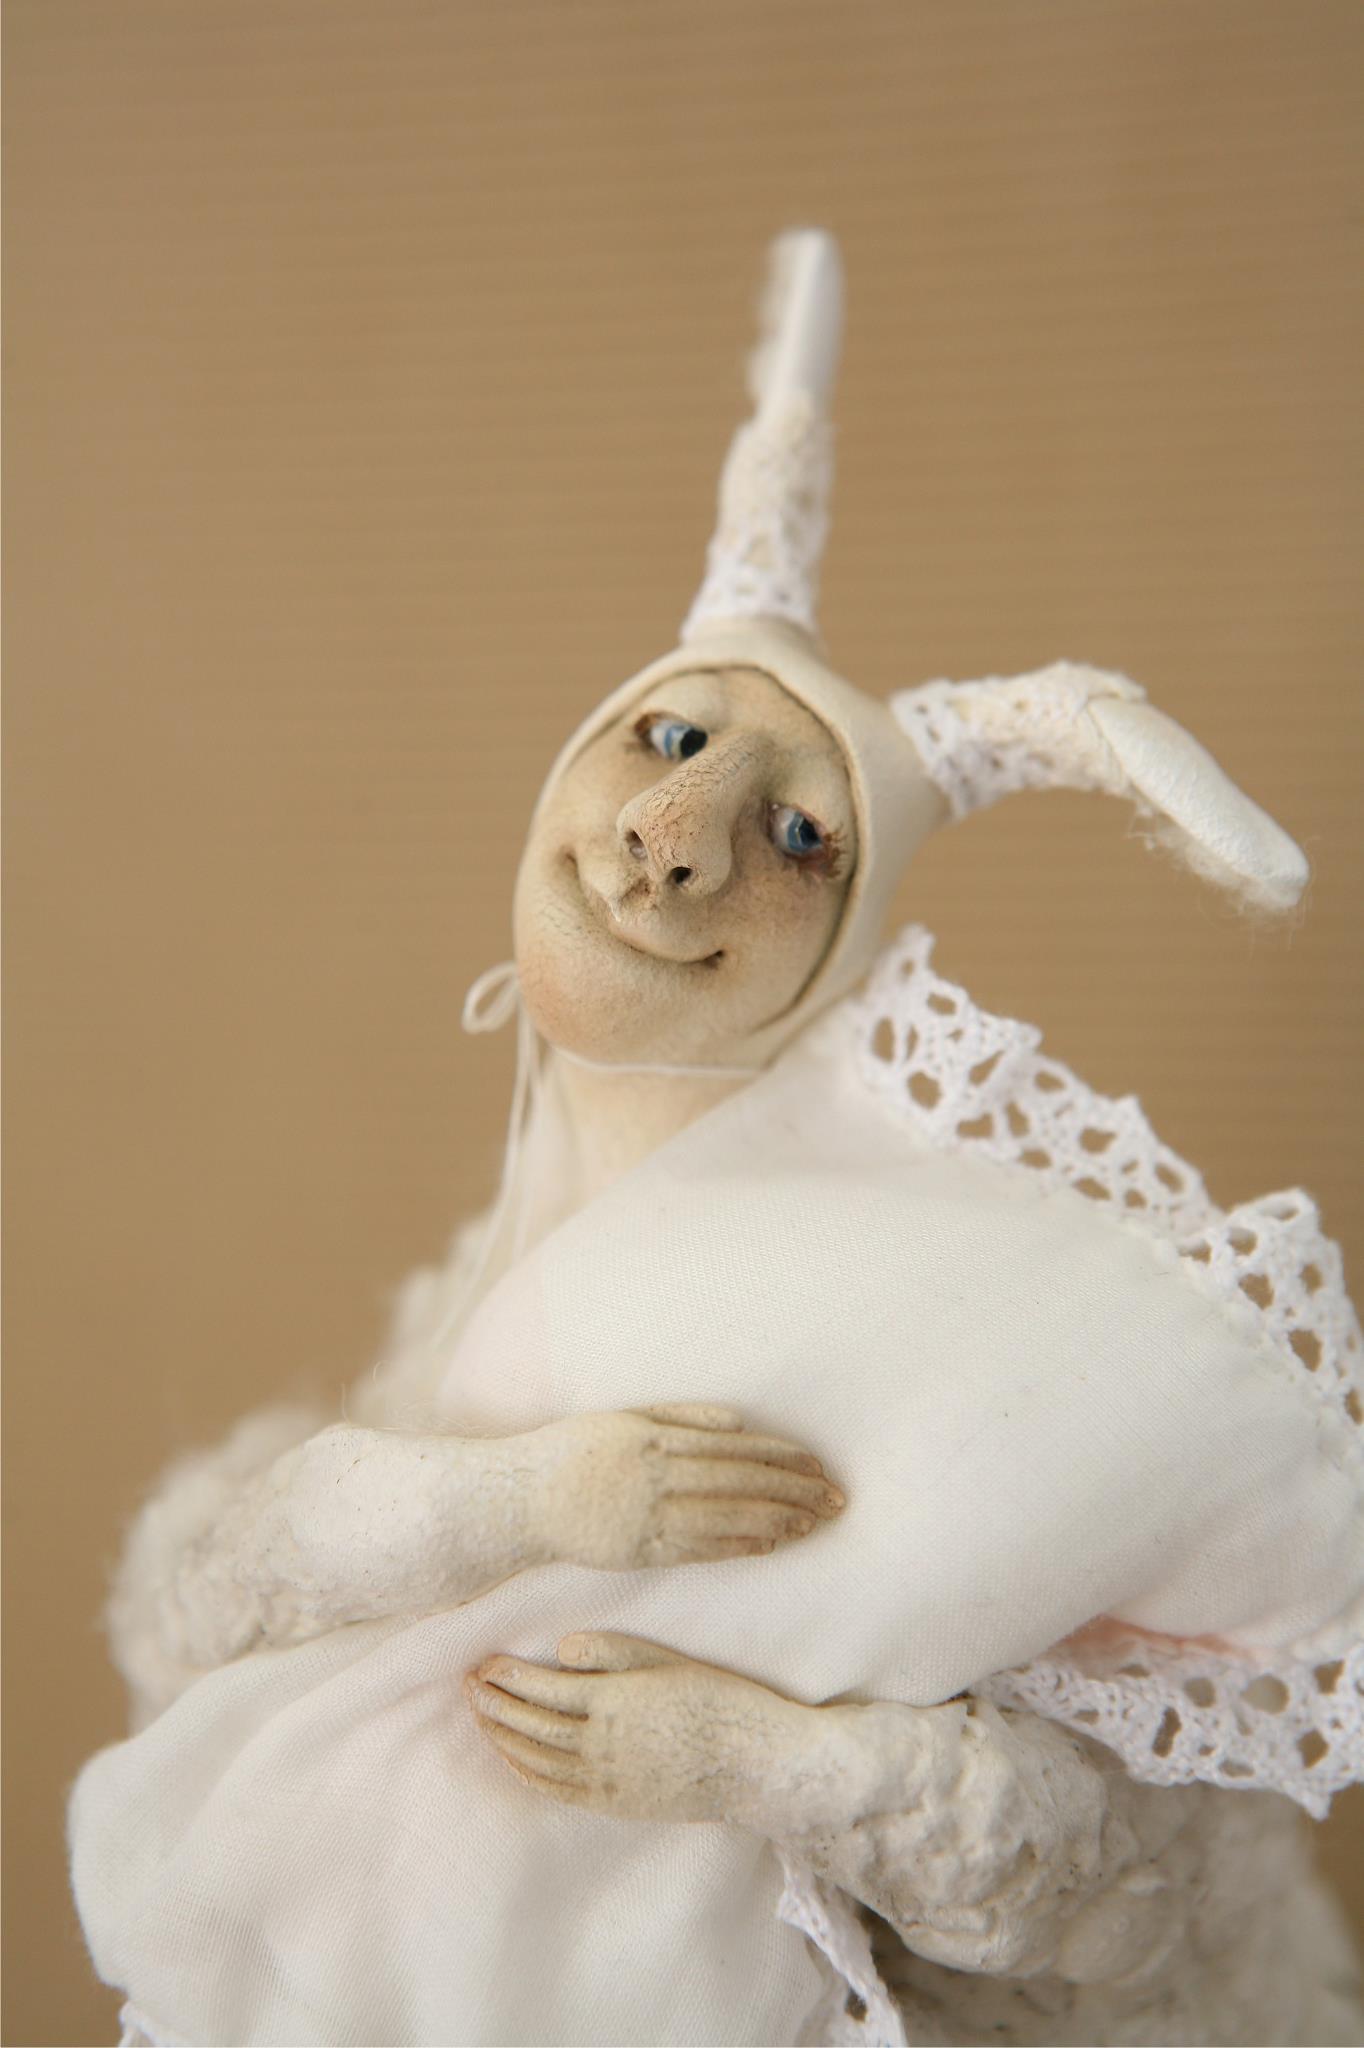 Rita Ona Danieliene – Sculptures Art dolls creation